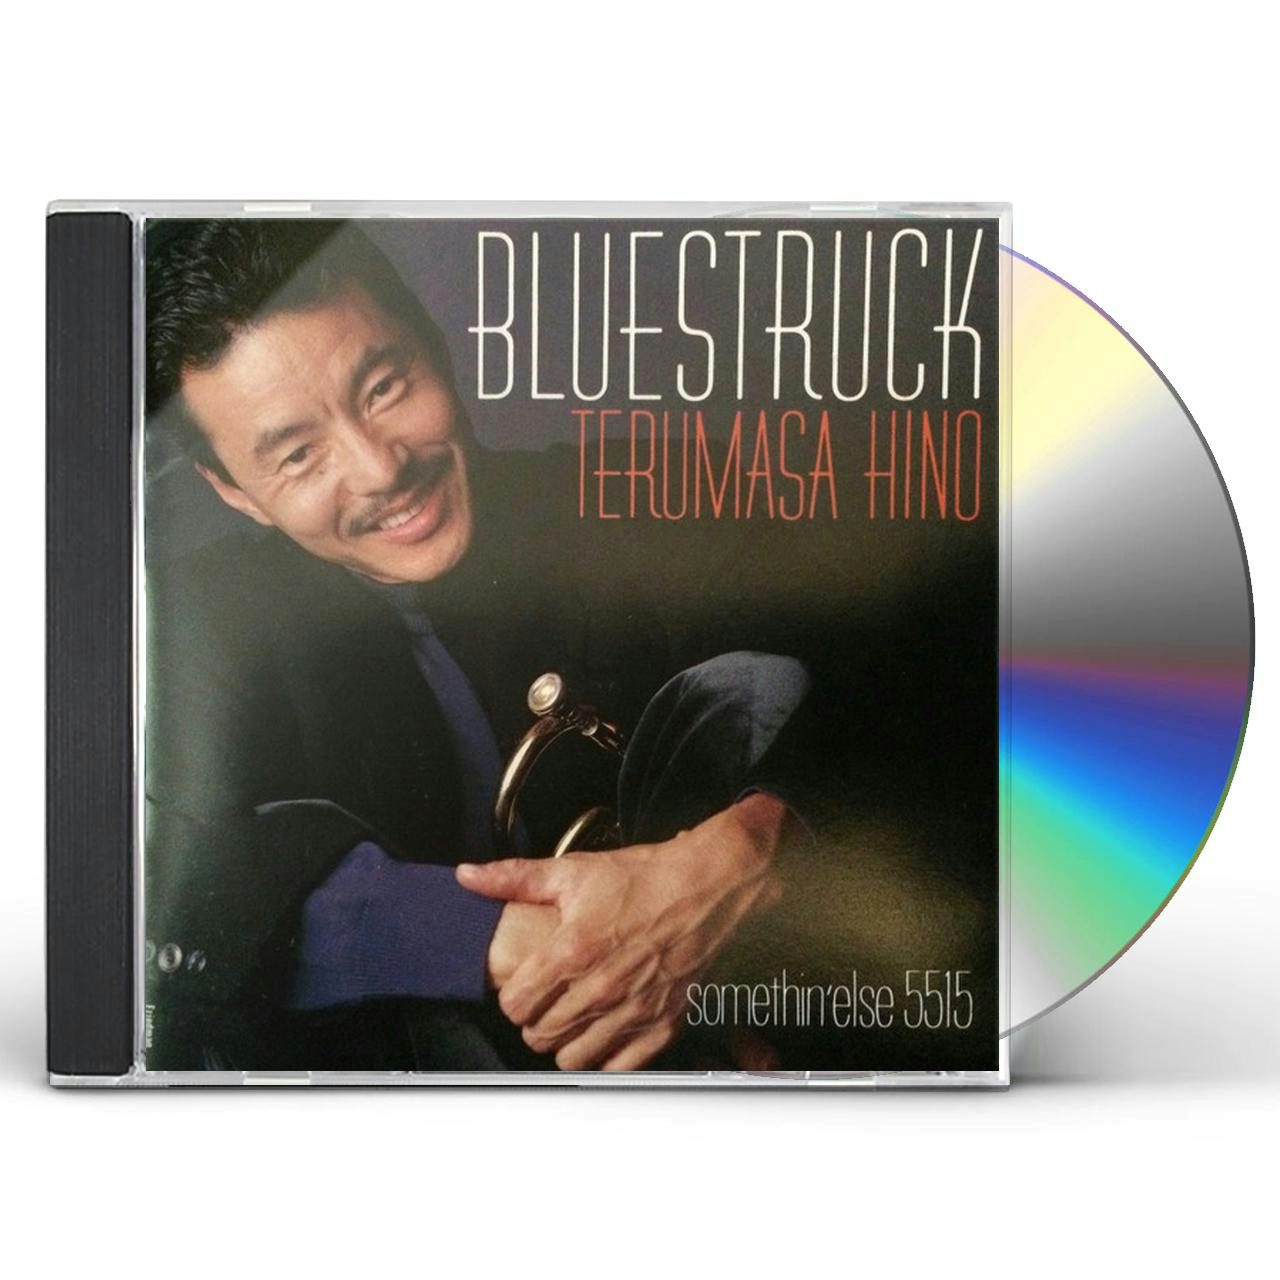 bluestruck cd - Terumasa Hino